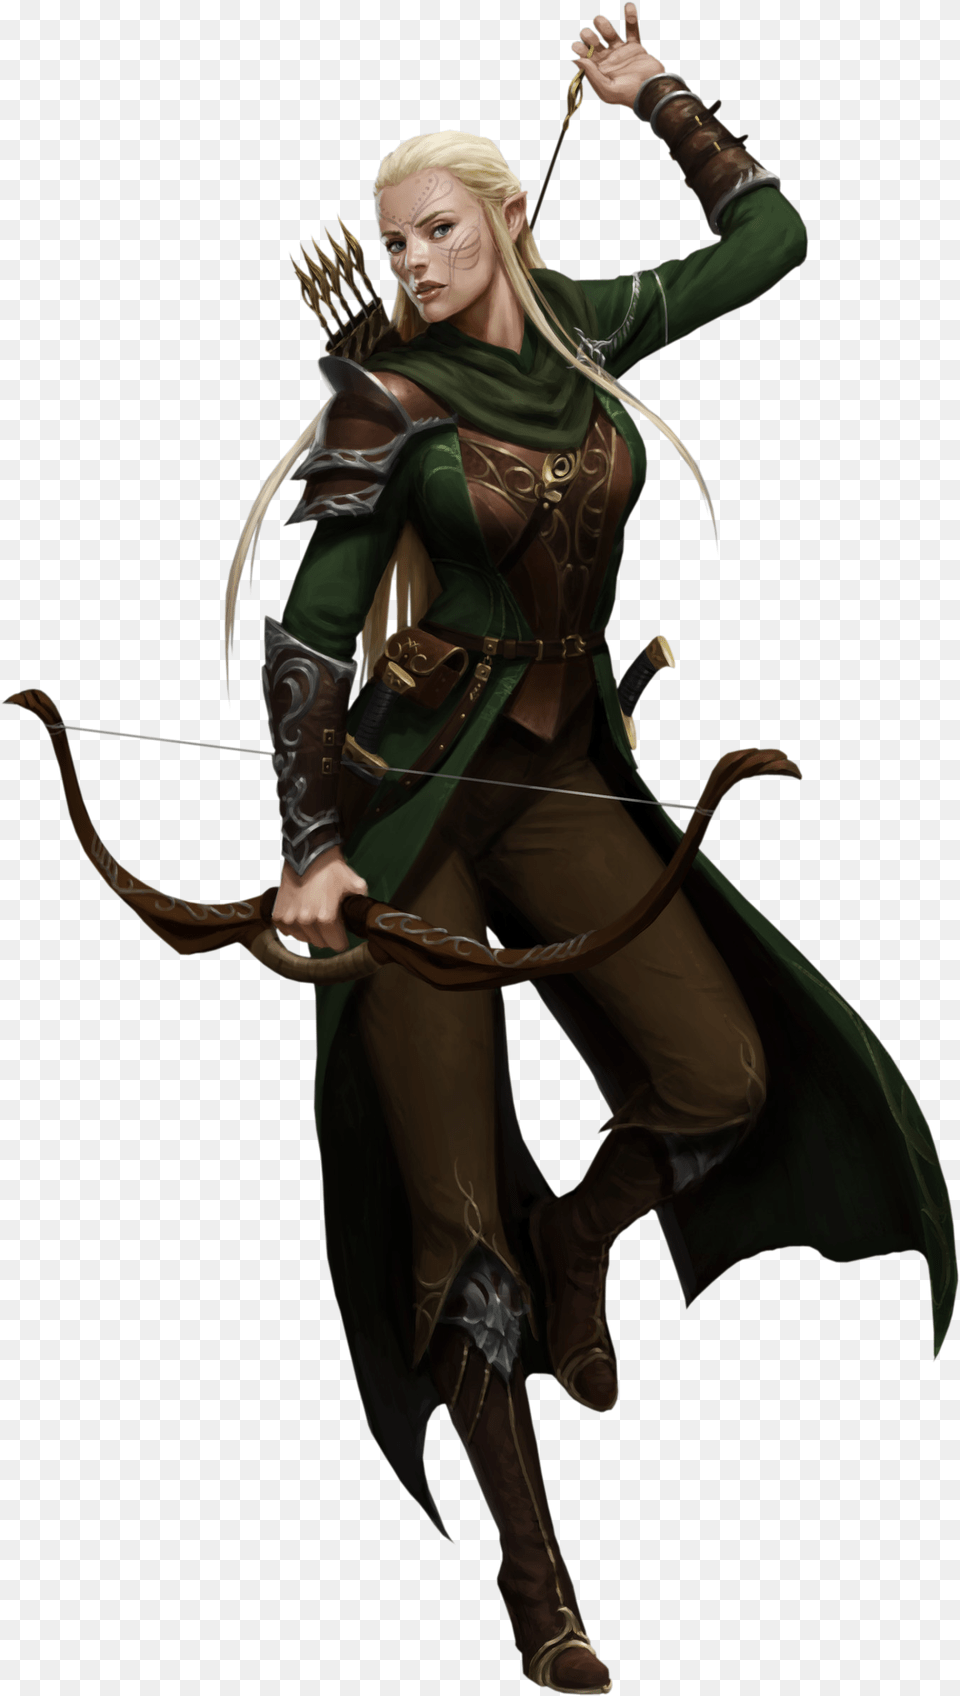 Pathfinder Female Elf Ranger, Archer, Archery, Bow, Weapon Png